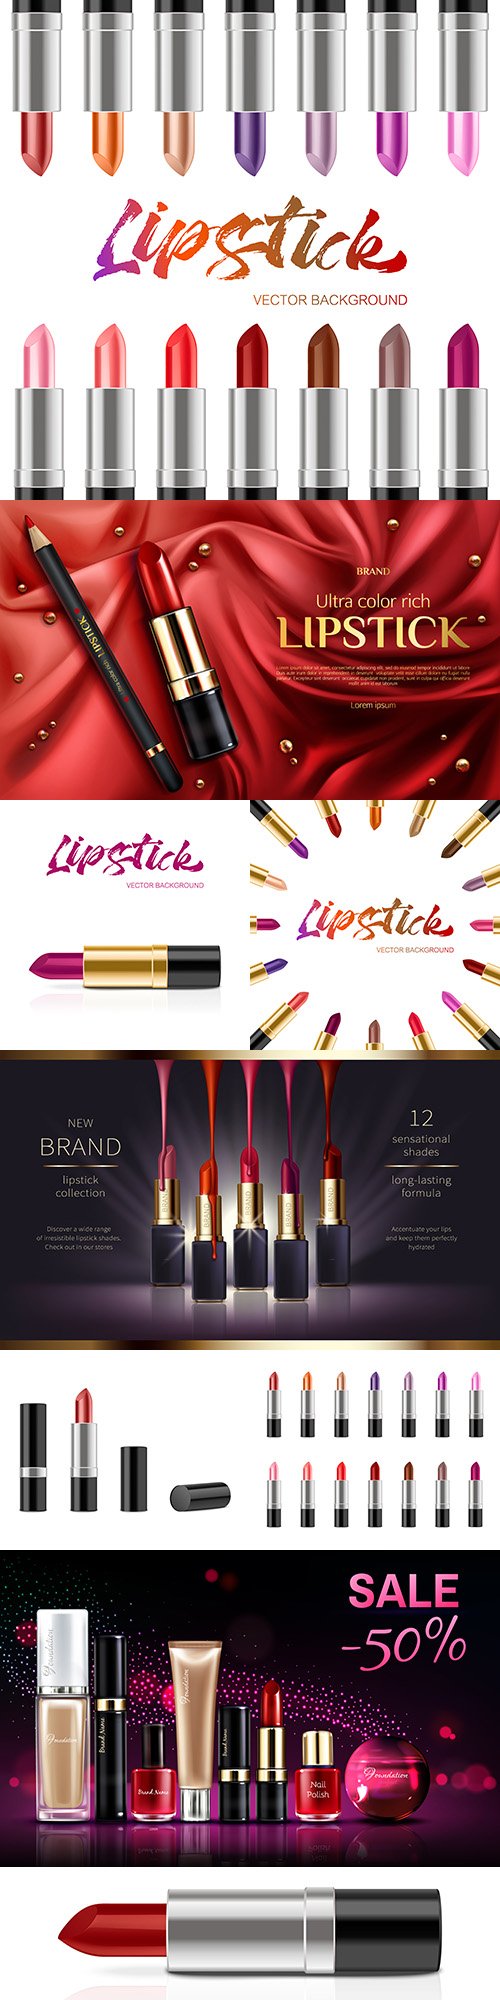 Lipstick cosmetics product banner design 3d illustration